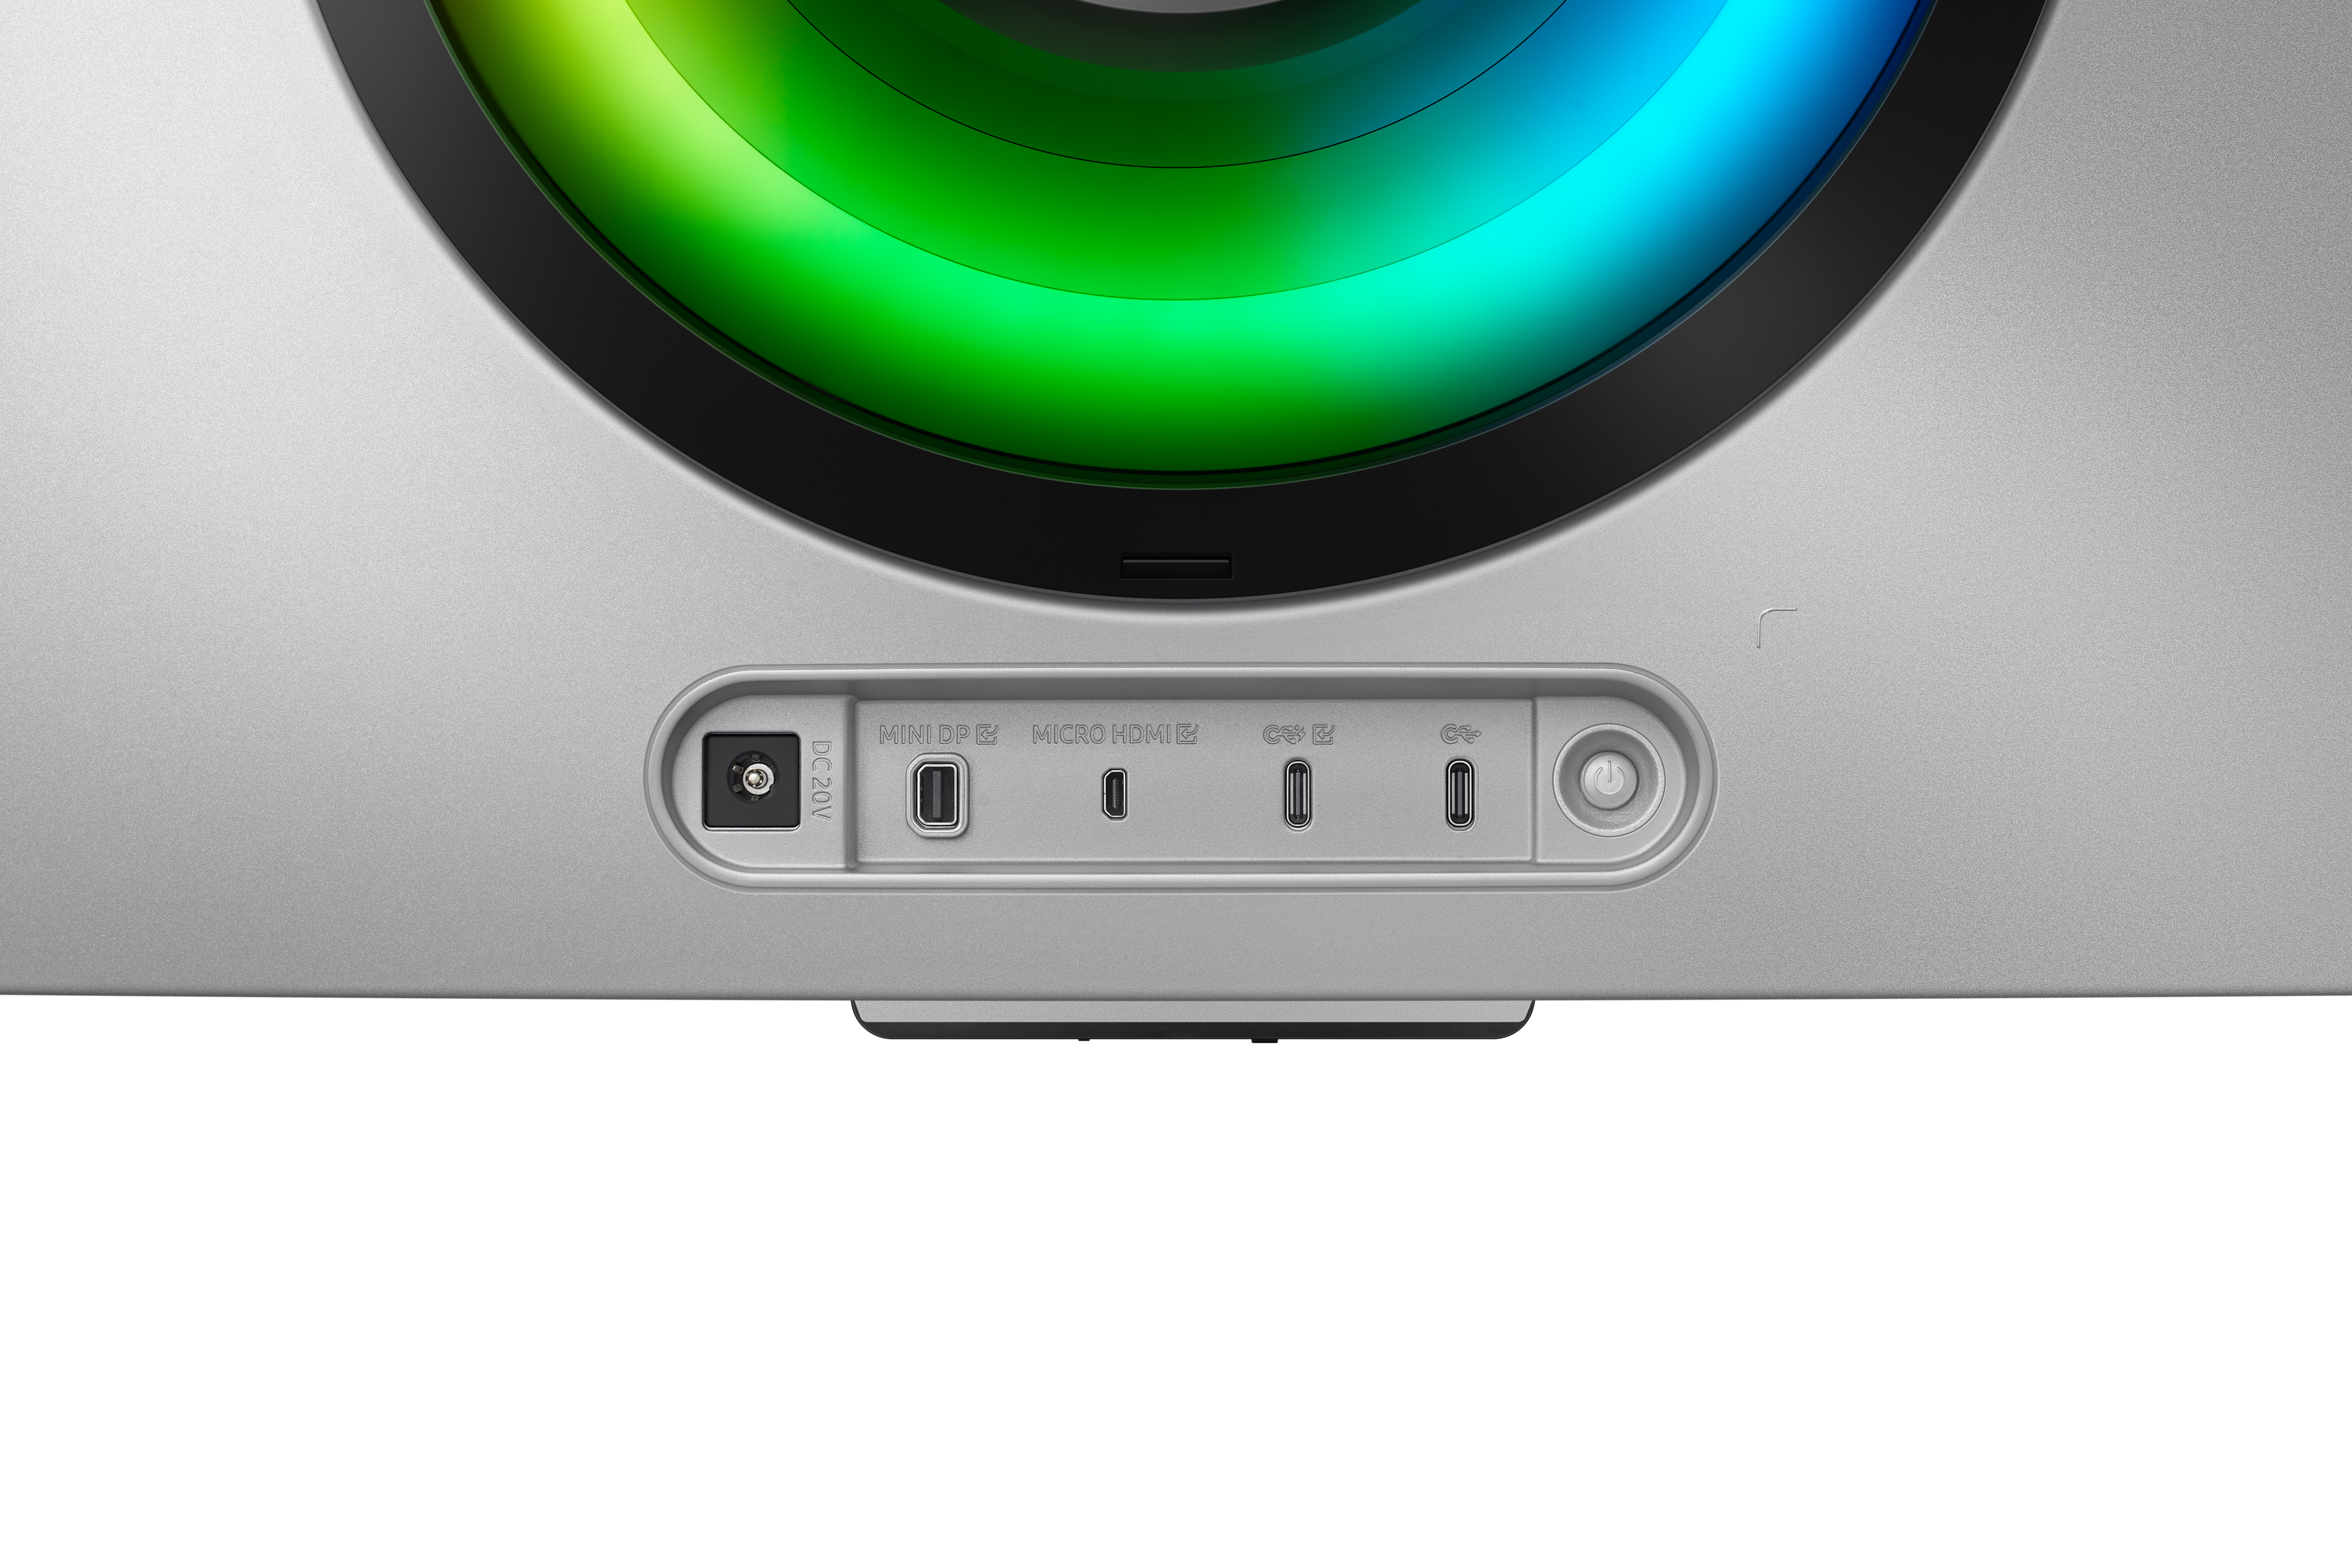 Samsung Odyssey OLED G8 LS34BG850